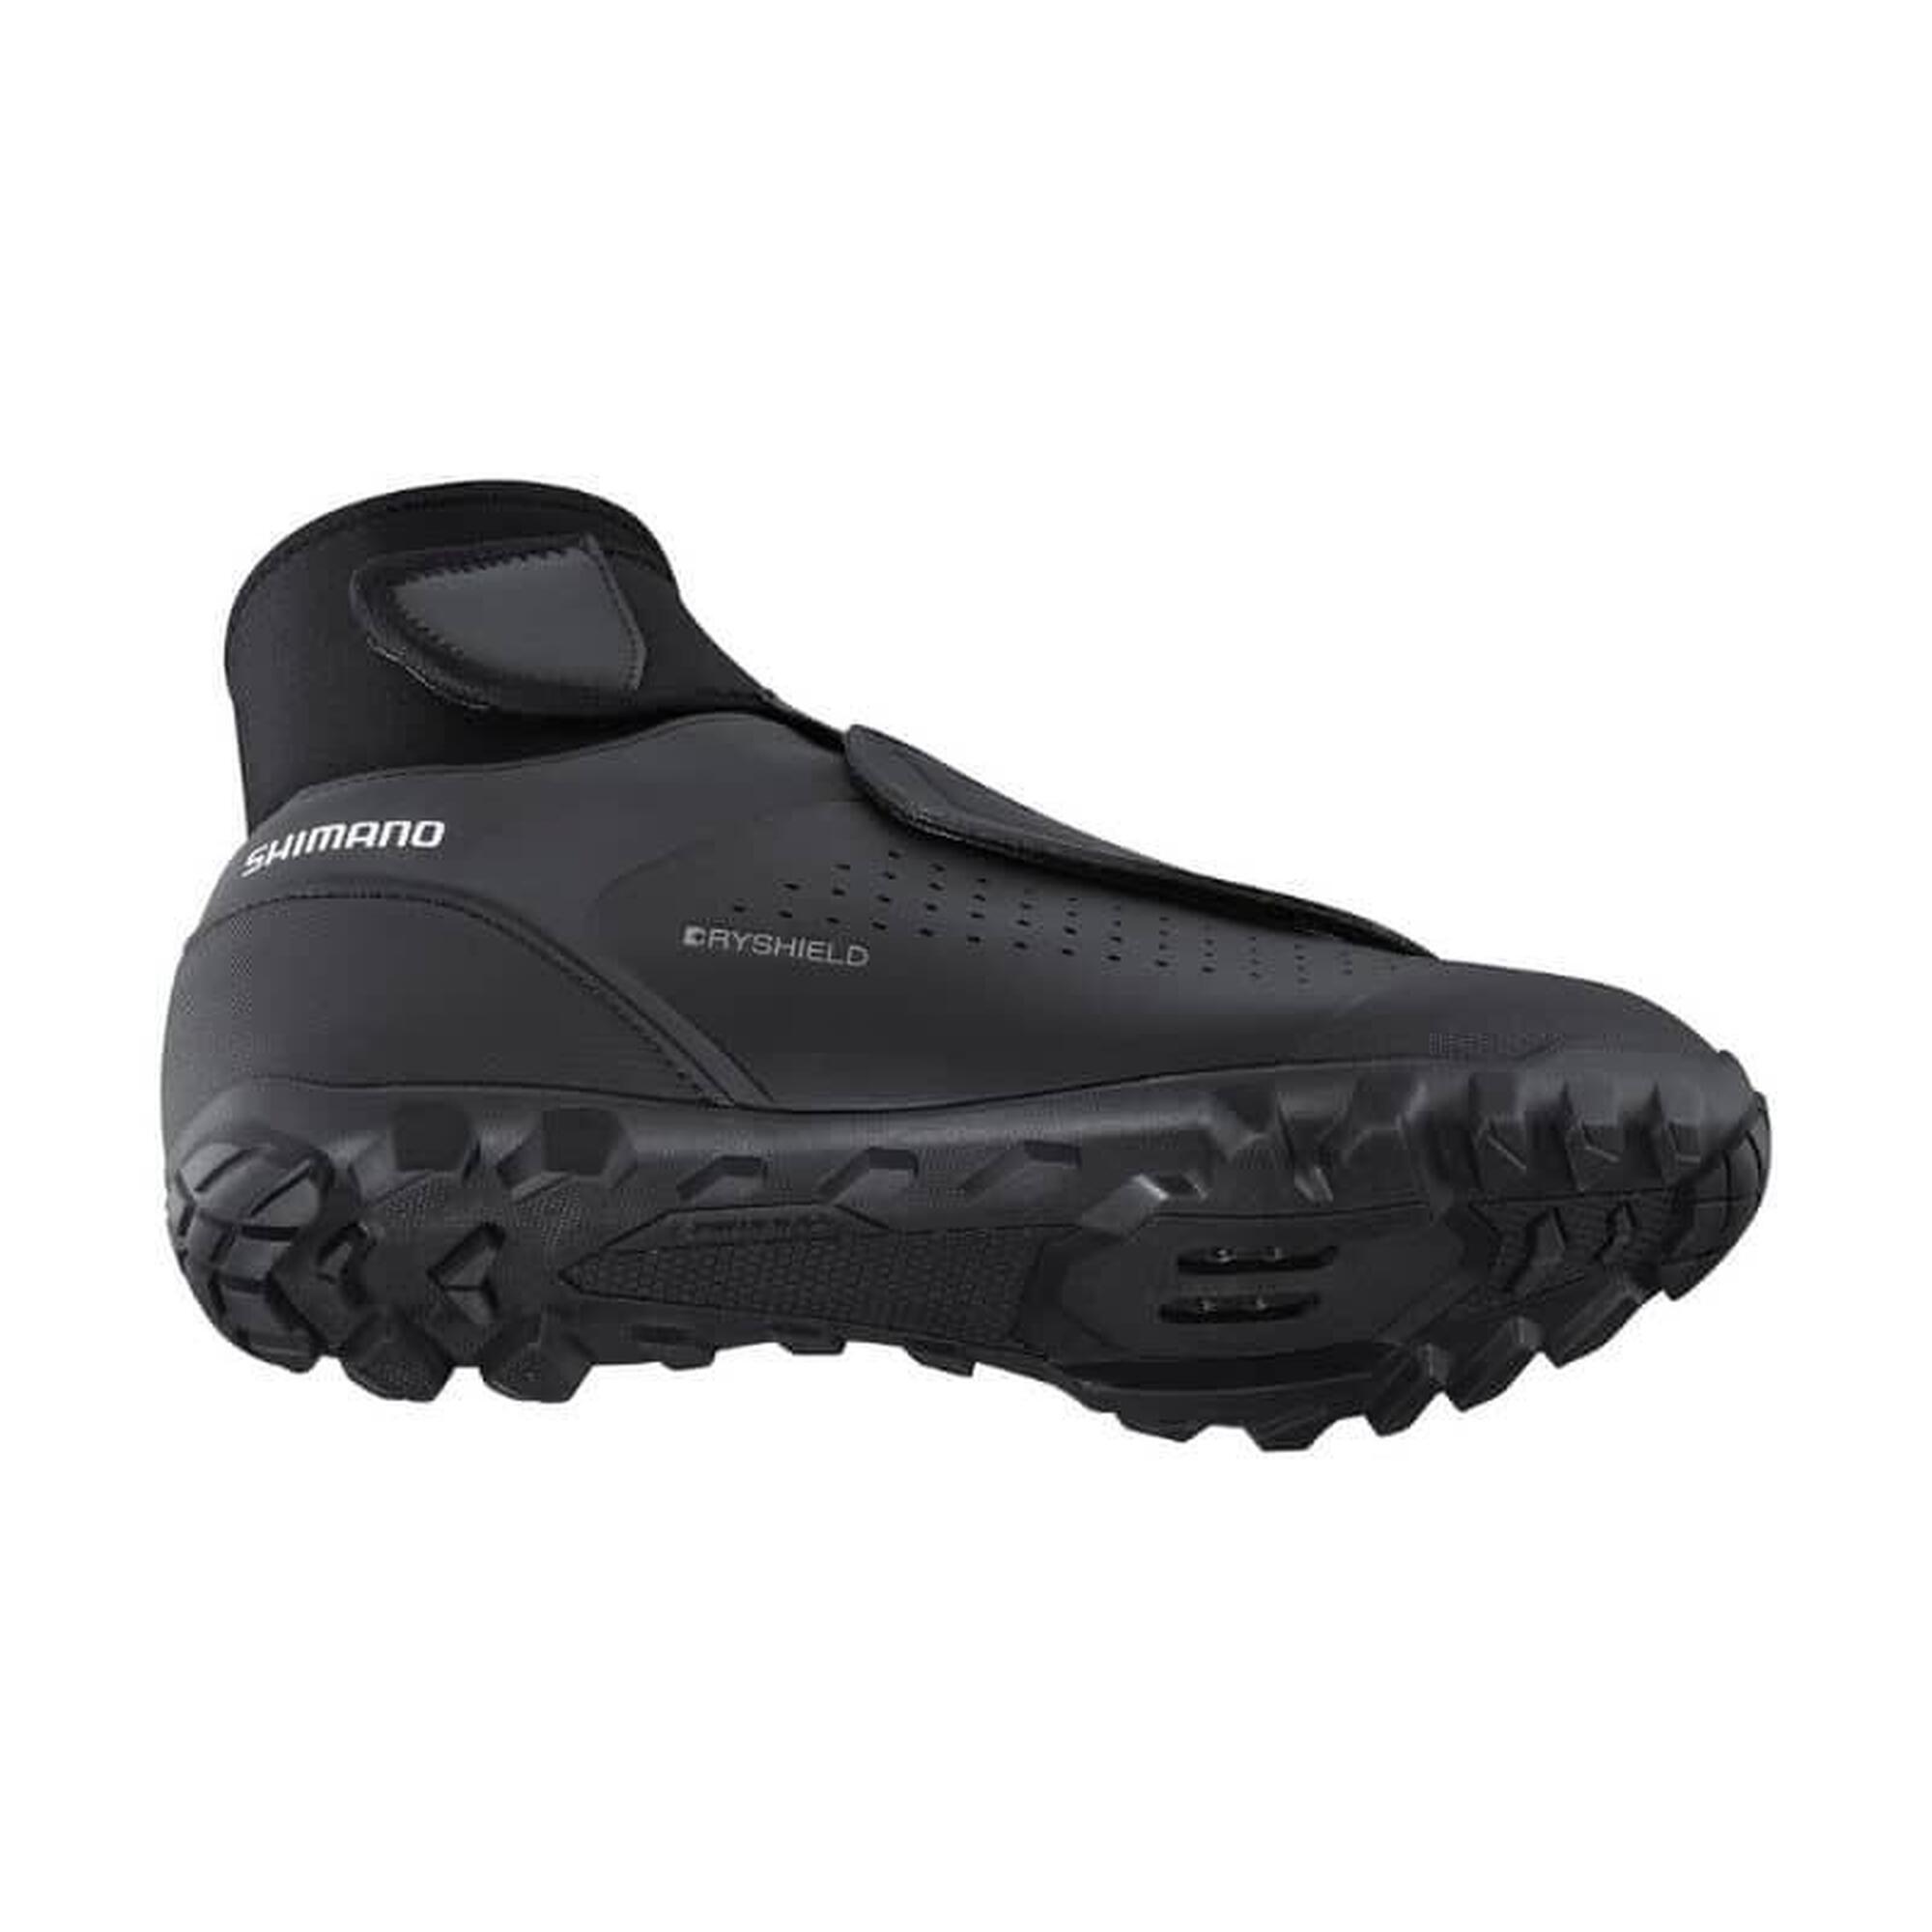 Zapatillas Shimano XC5 MTB negro gris oscuro